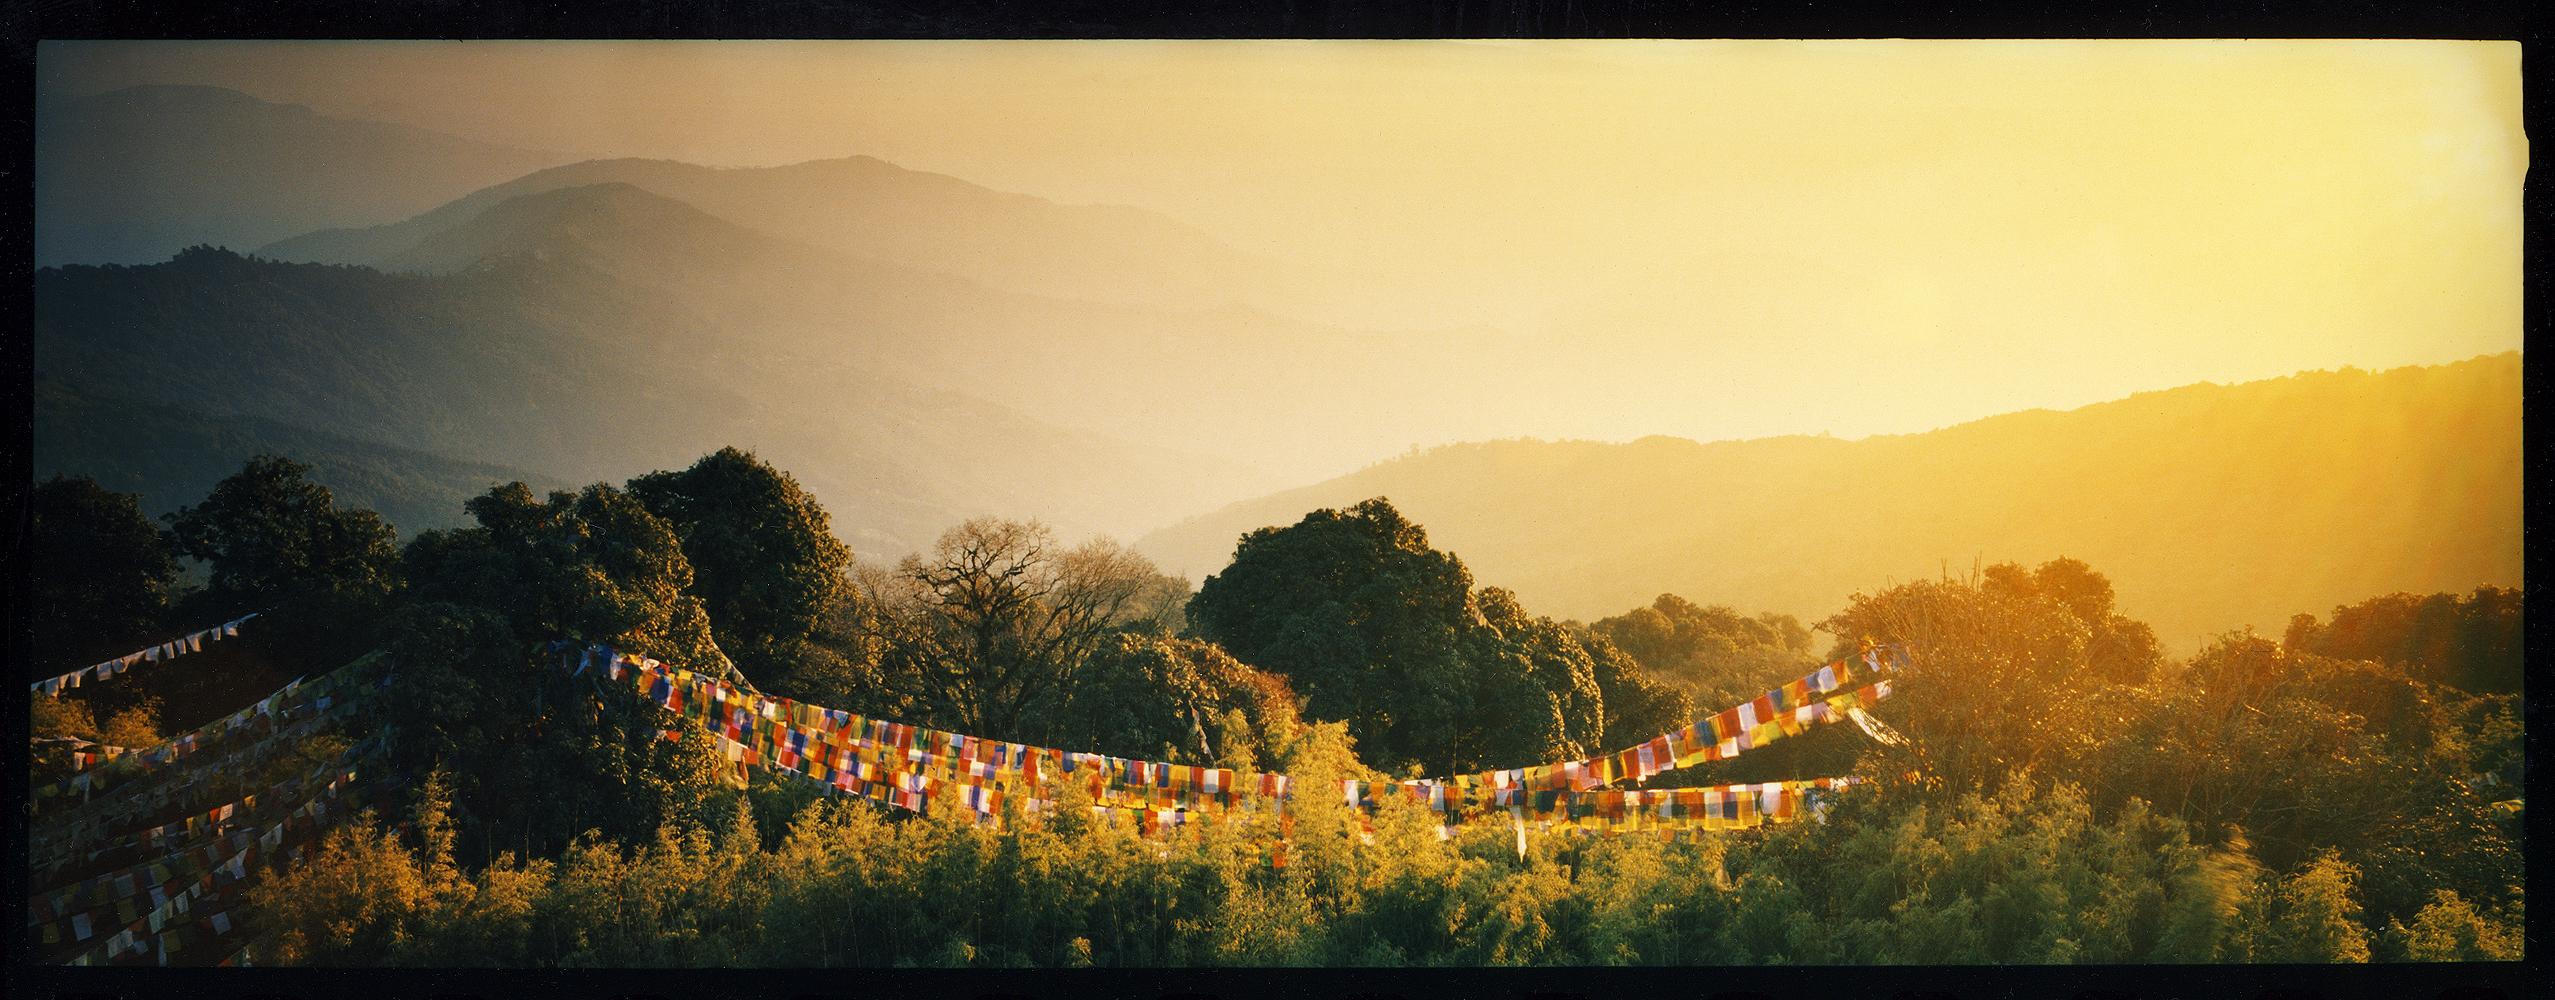 Prayer Flags, Darjeeling, - Sunrise, landscape color photography